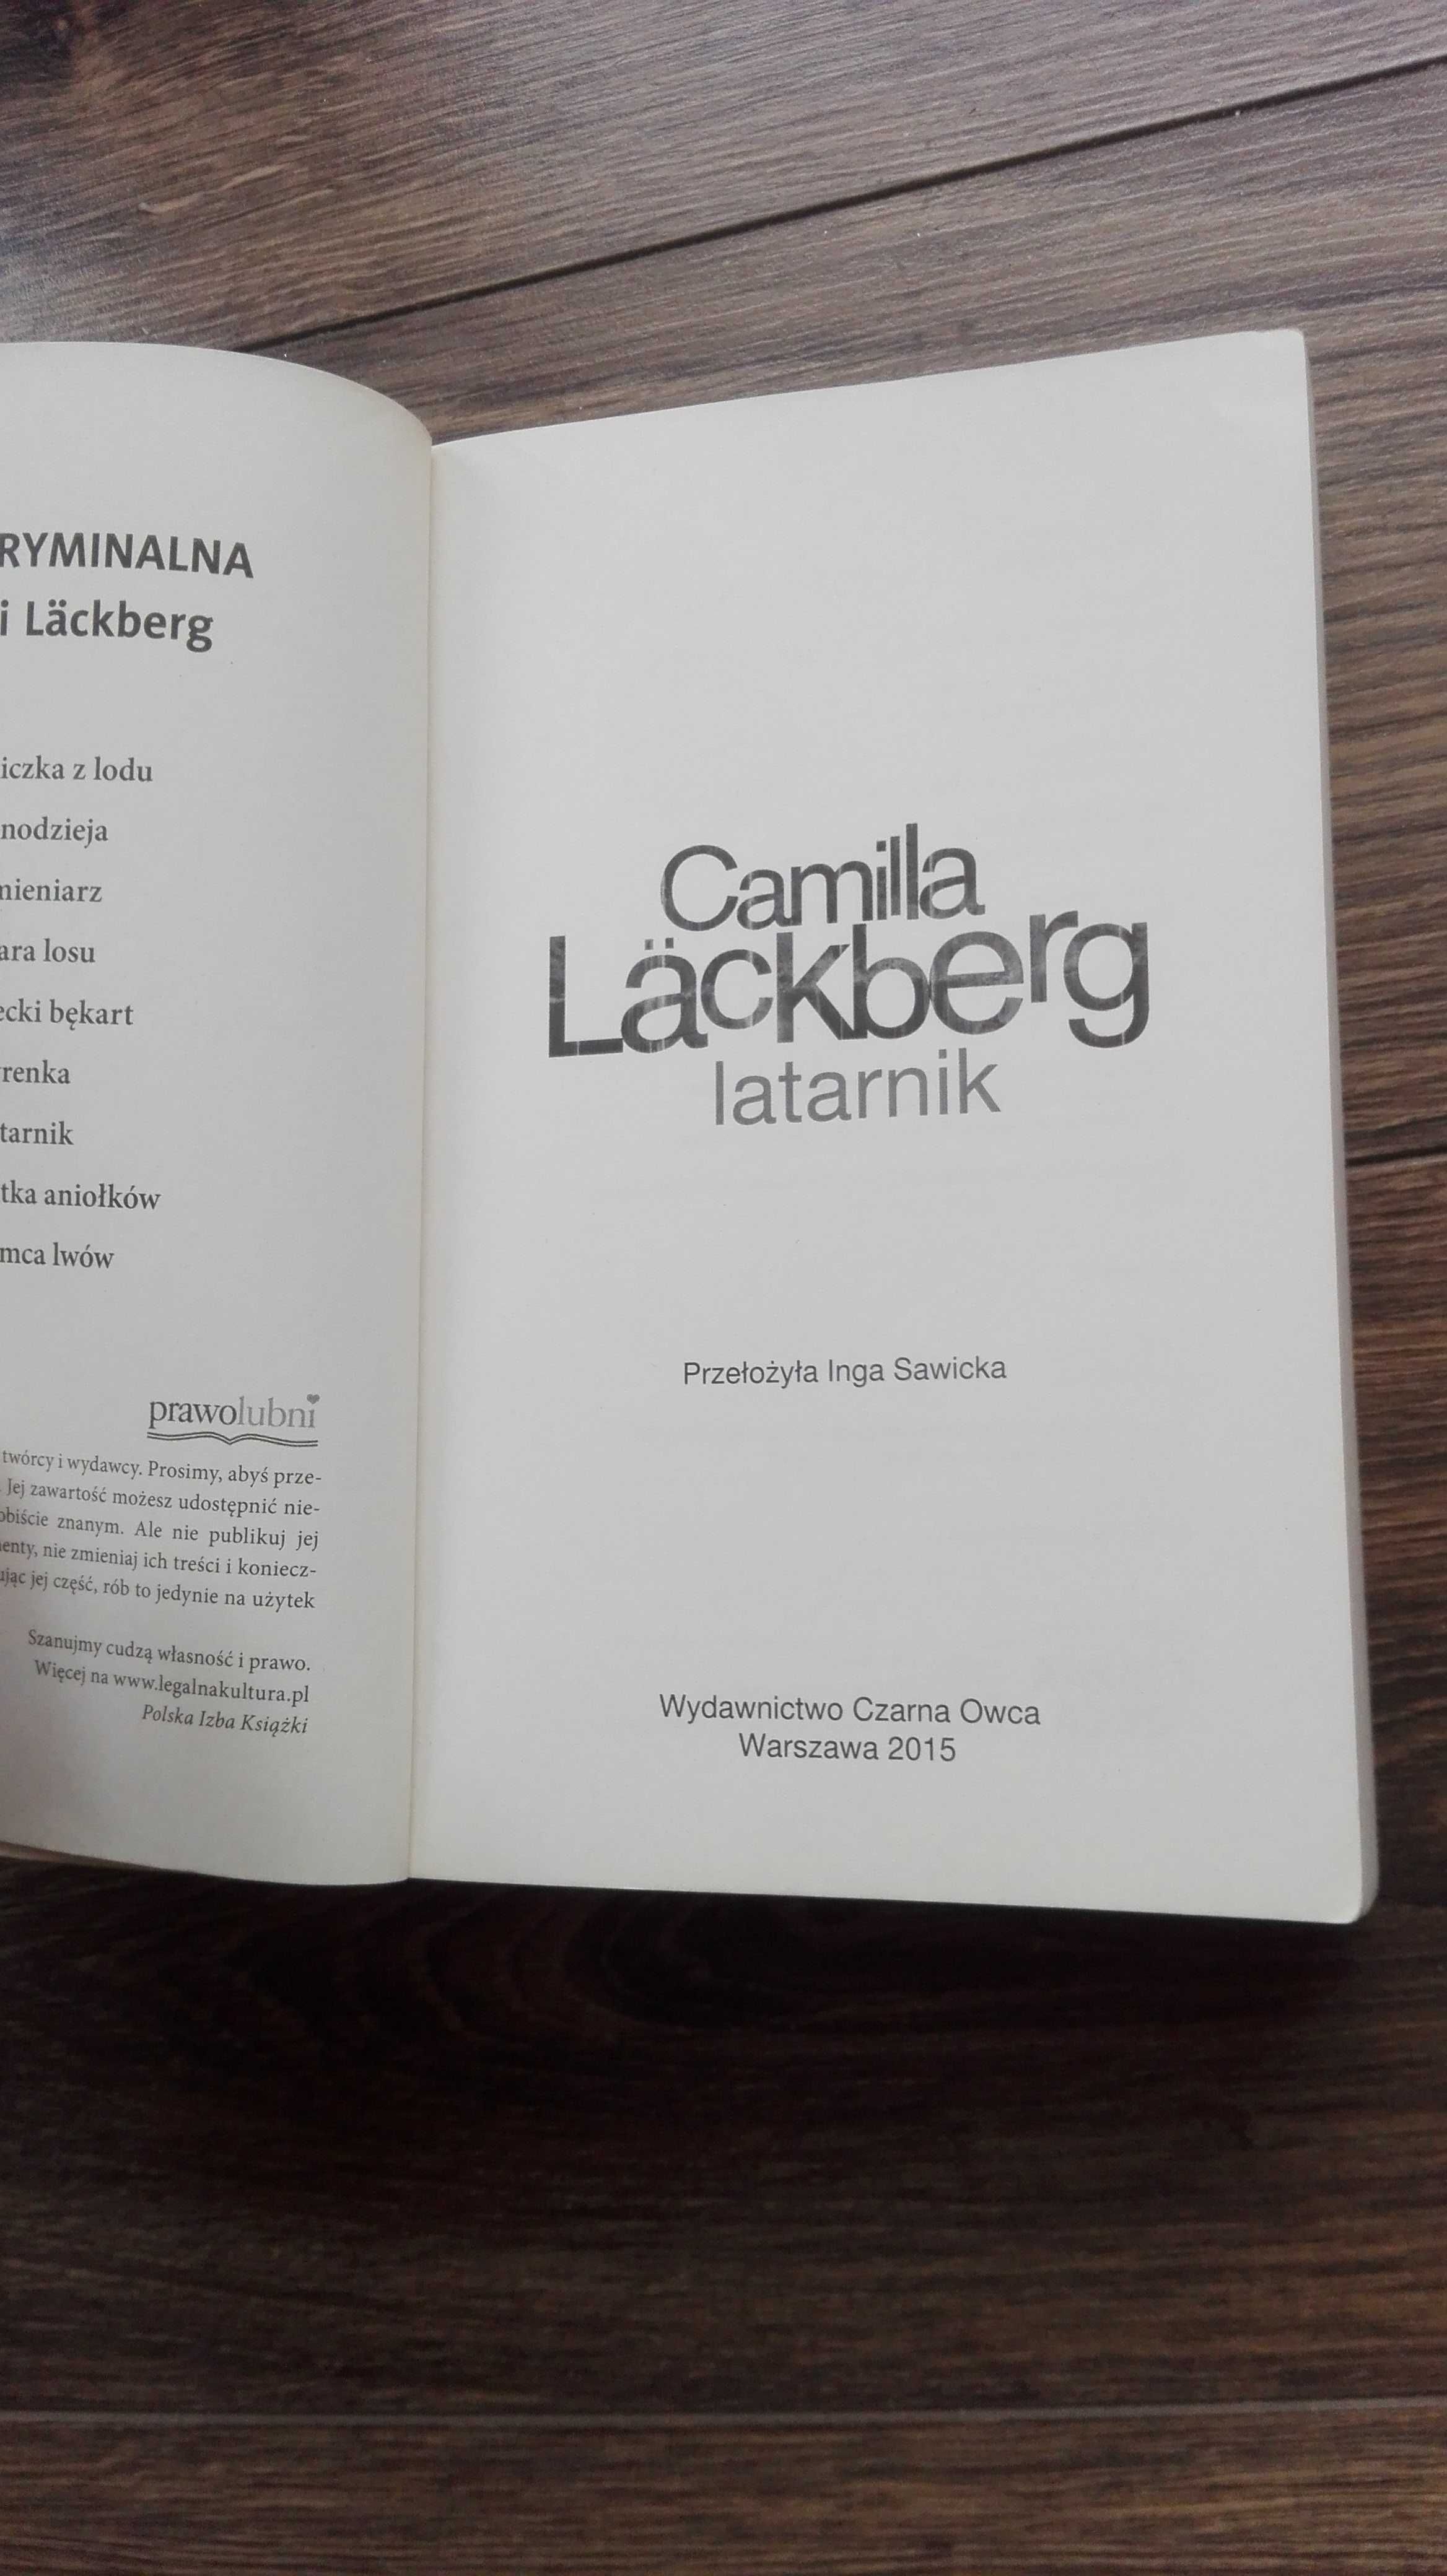 Latarnik Camilla Läckberg